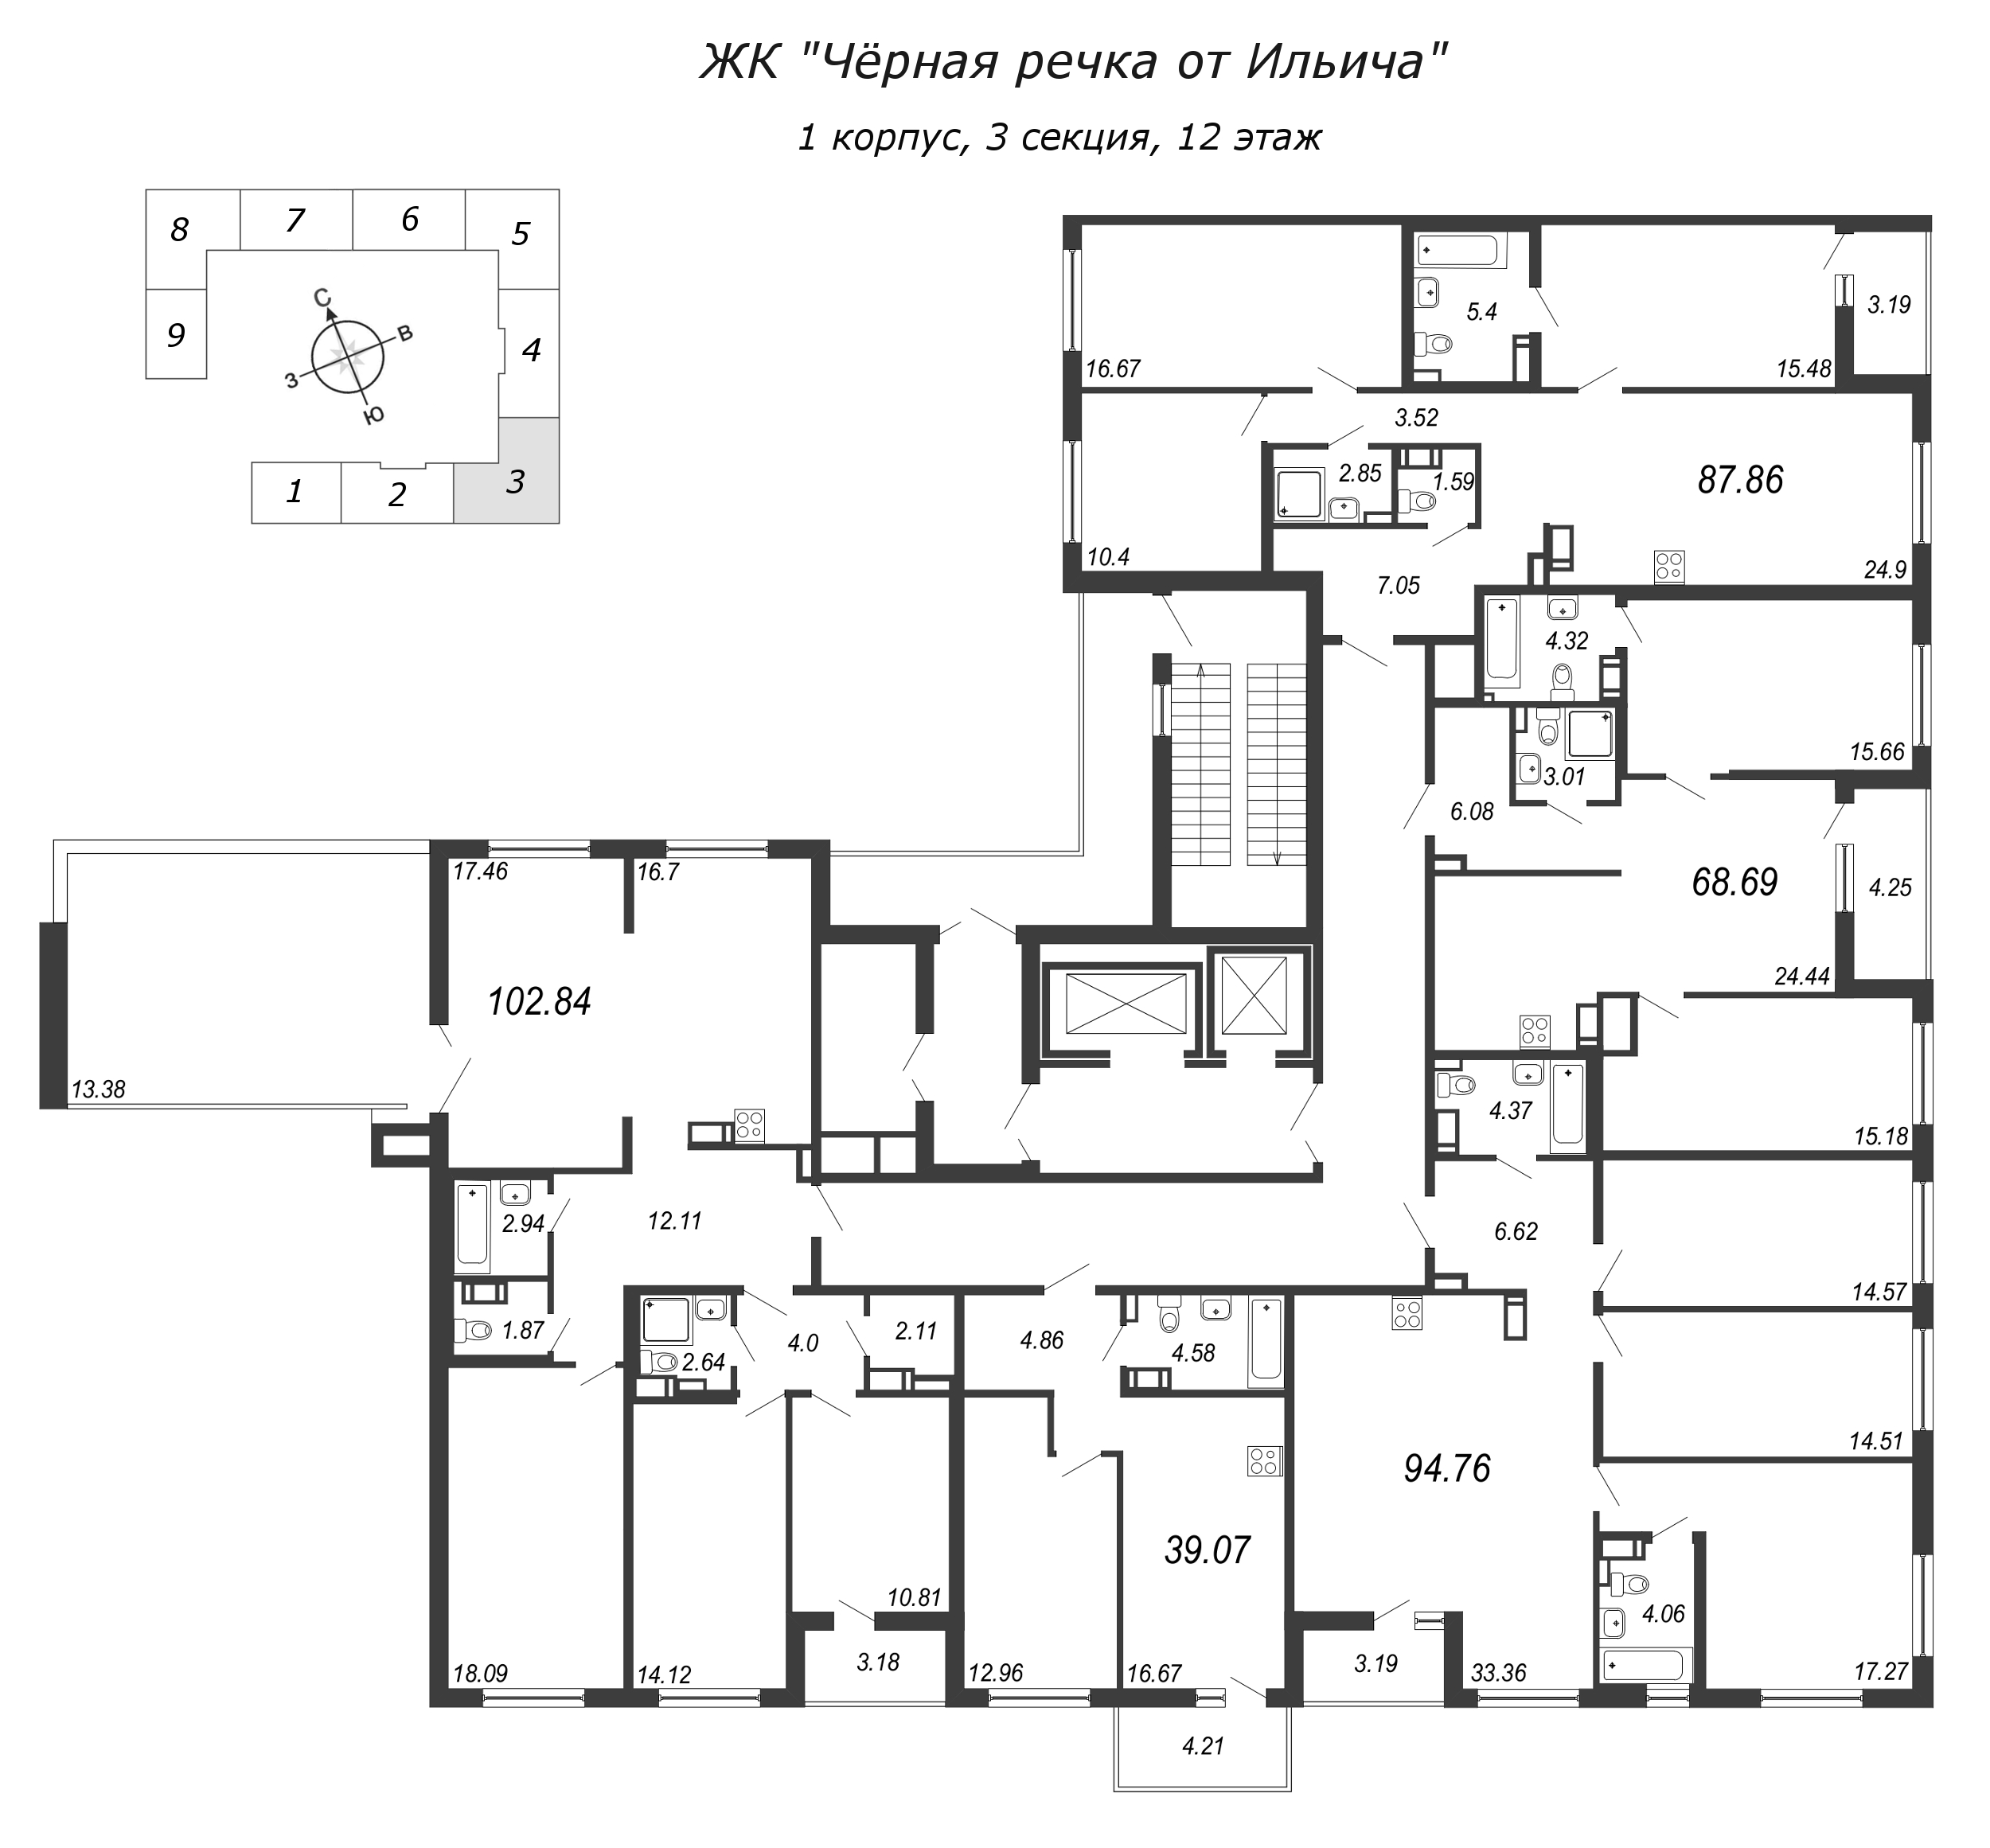 4-комнатная (Евро) квартира, 71.3 м² - планировка этажа